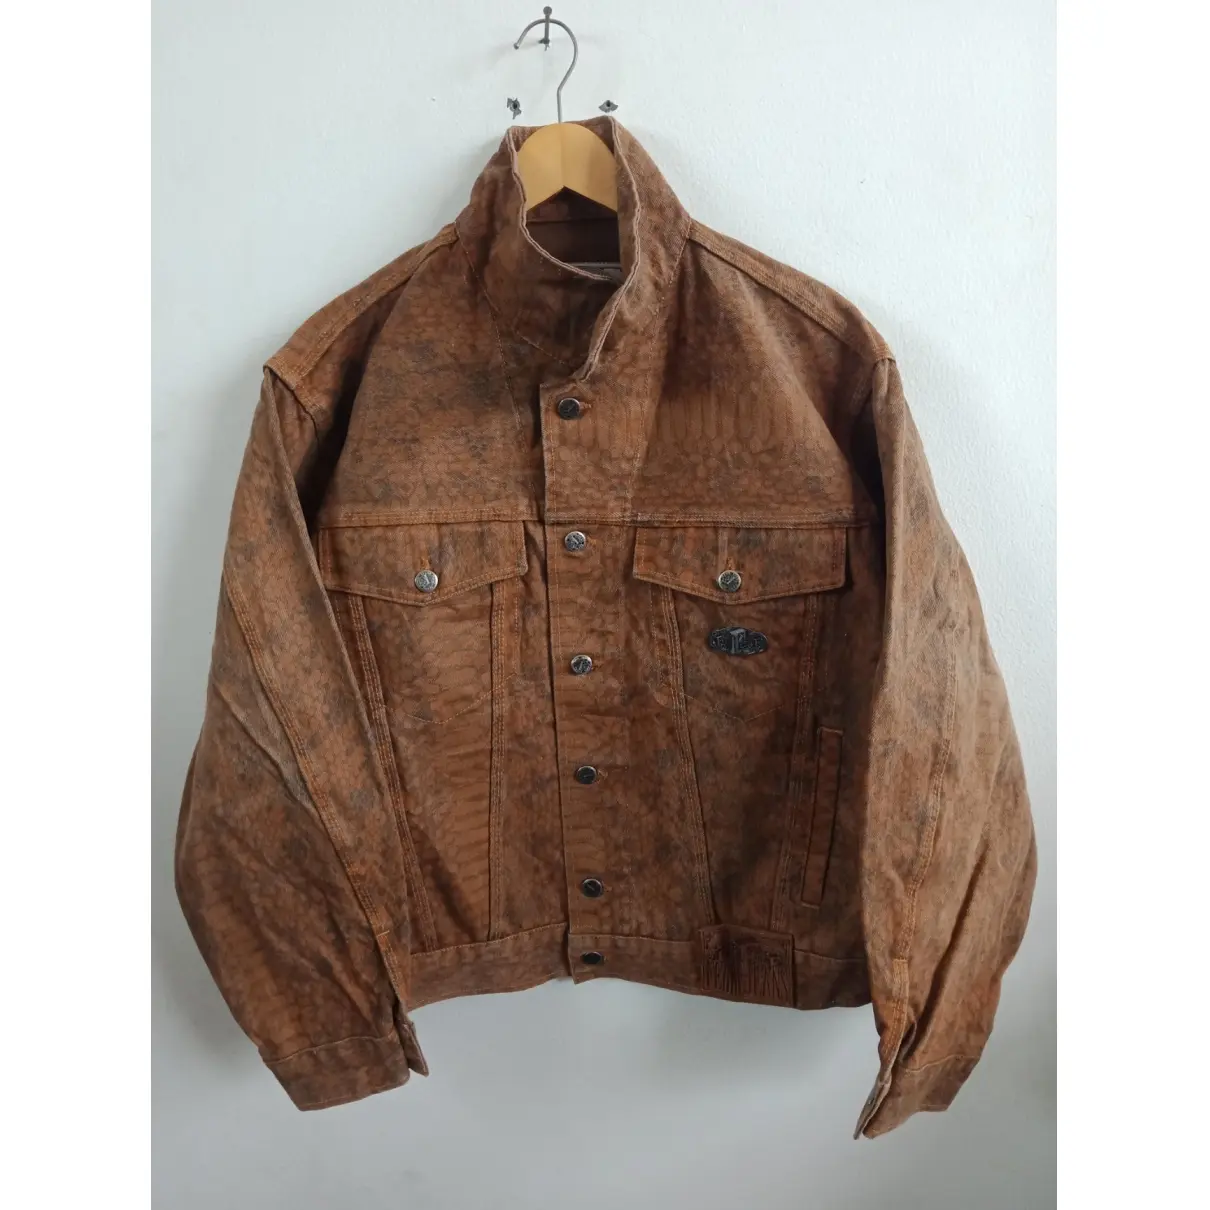 Buy Gianfranco Ferré Jacket online - Vintage